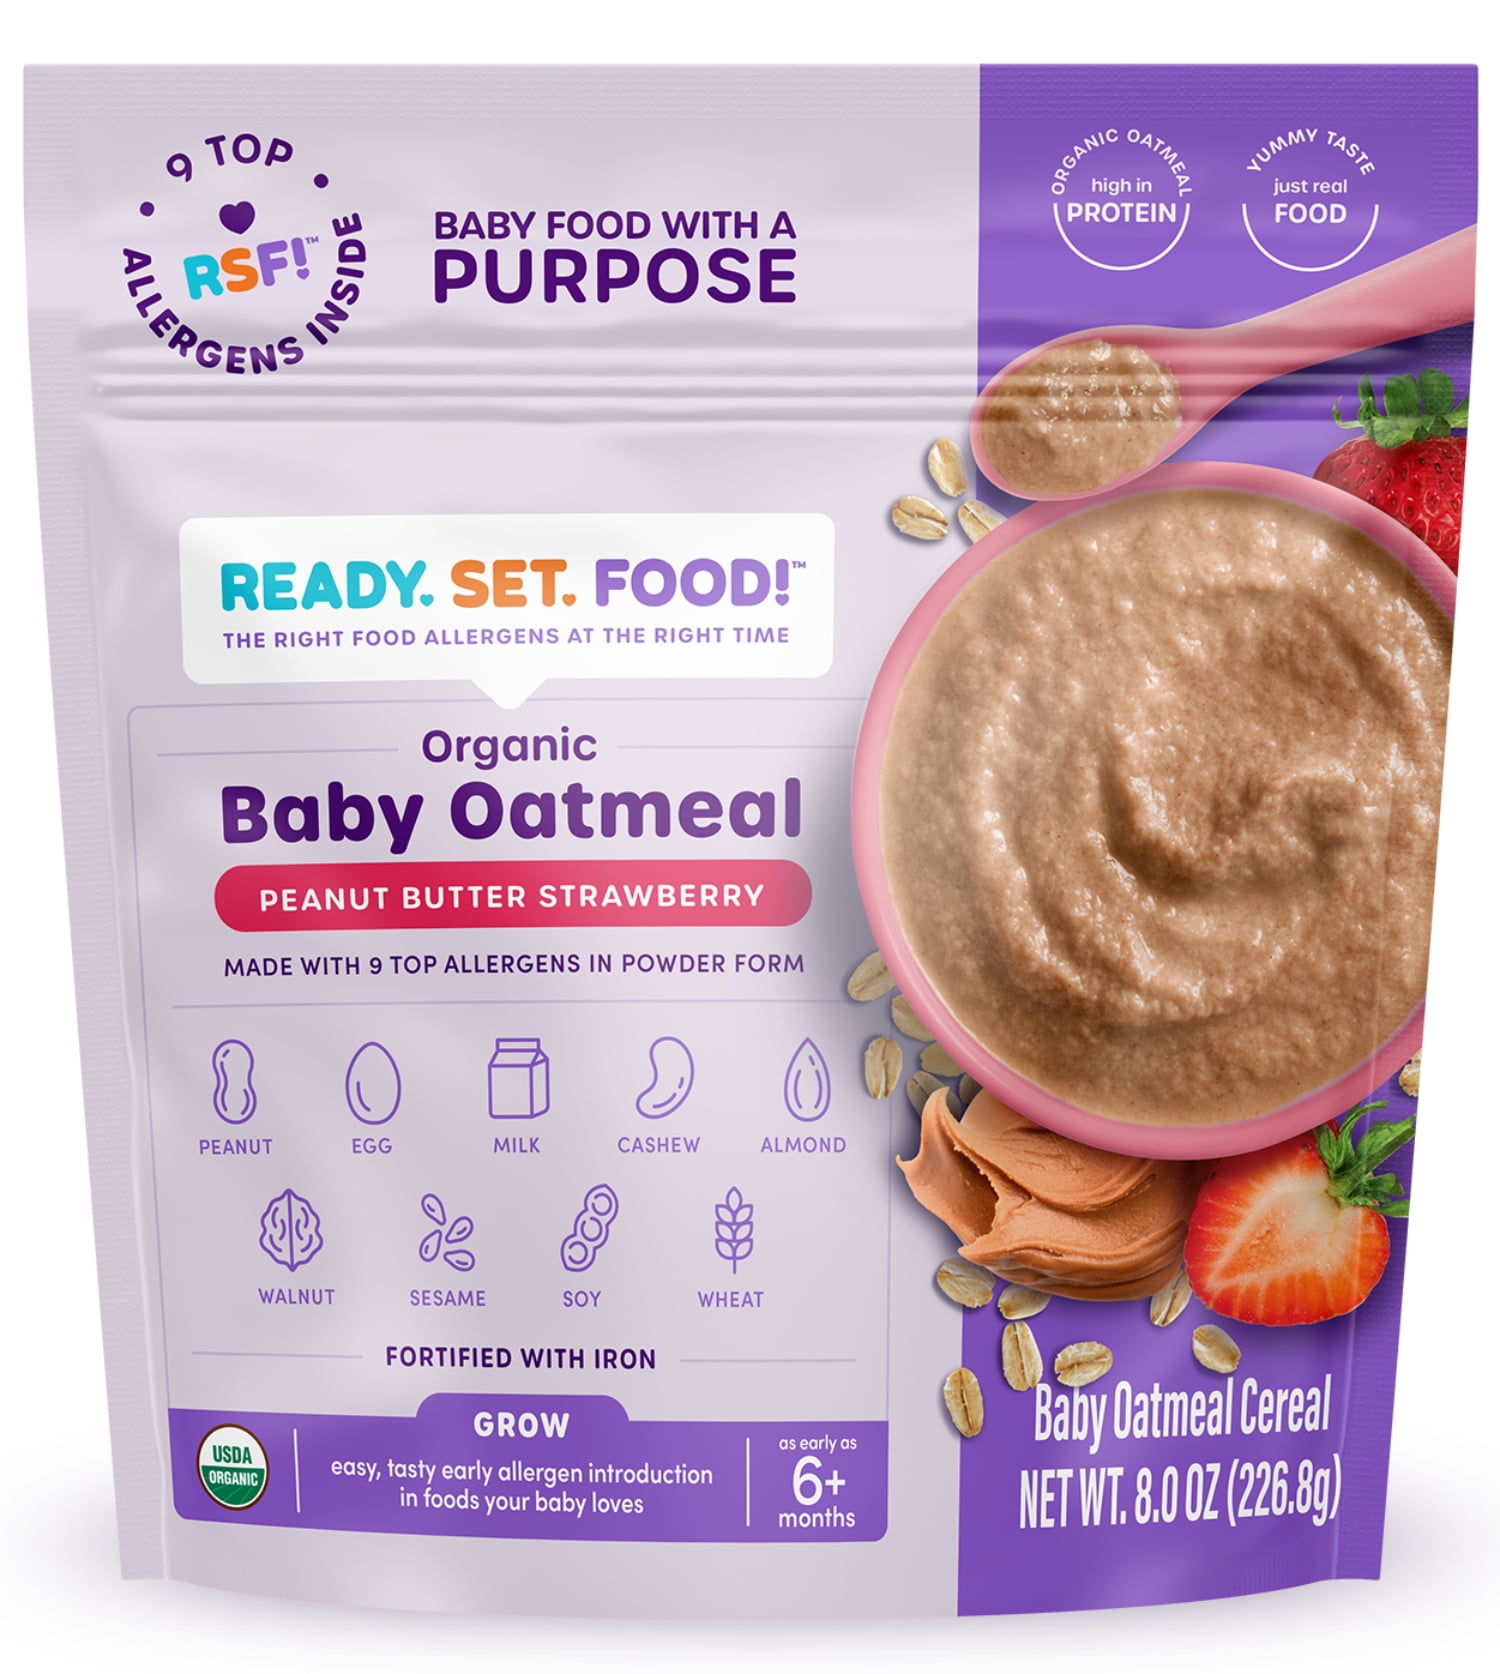 Nestle Nestum Infant Cereals (2-Pack) - 300g — The Caribbean Export Company